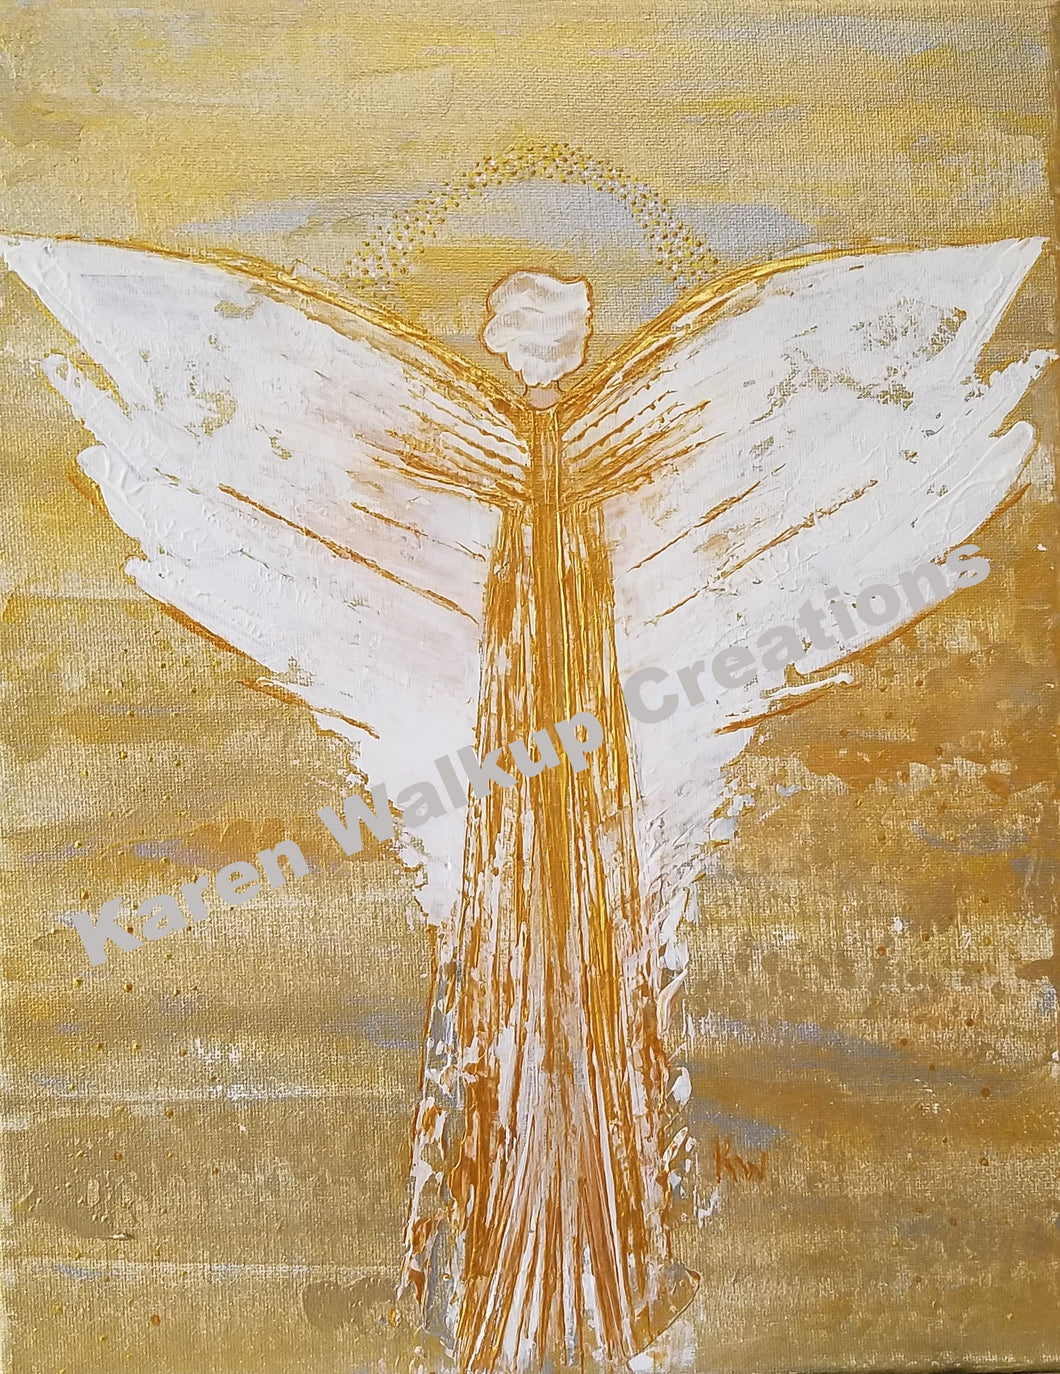 Angel~116  Fine art giclee* print on archival watercolor paper.